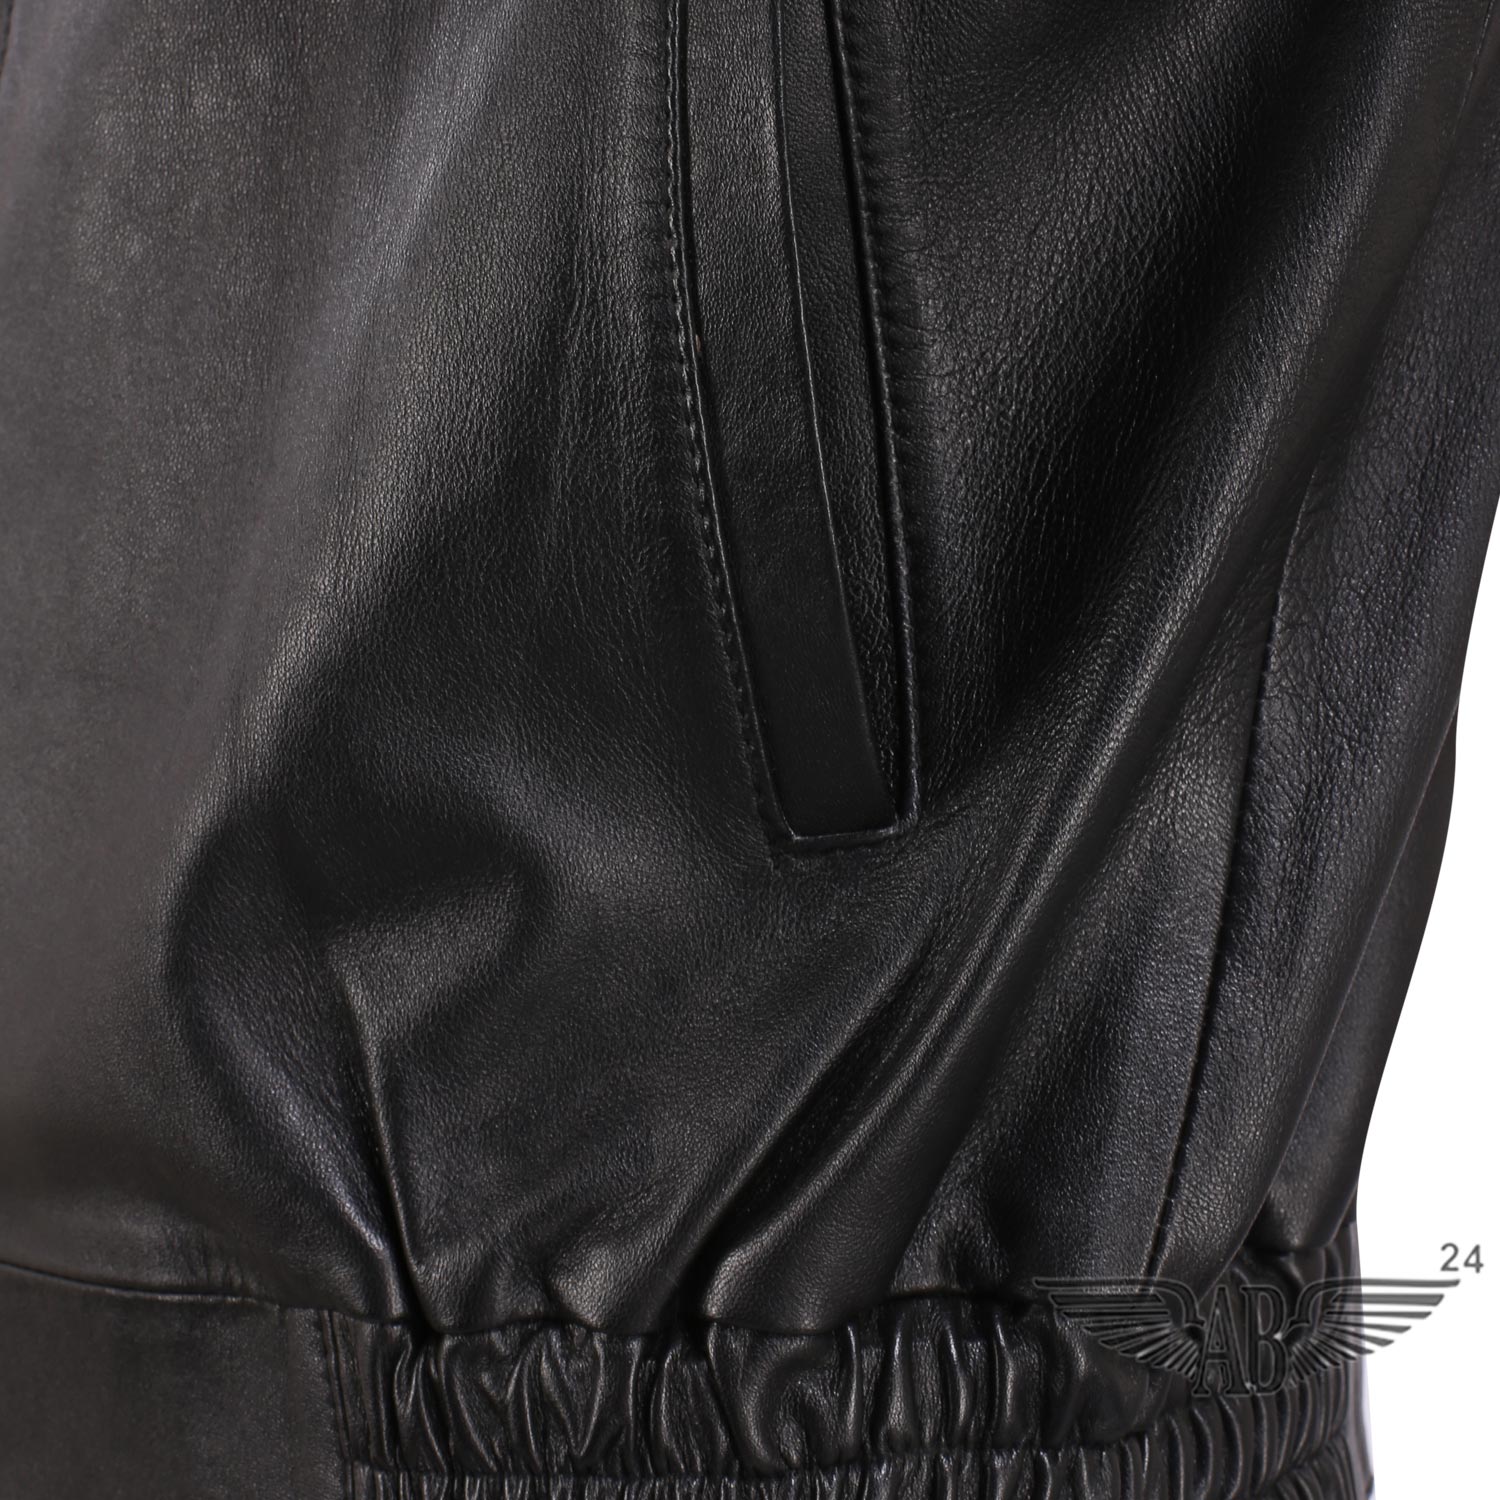 Close image of slit pocket of Bomber jacket